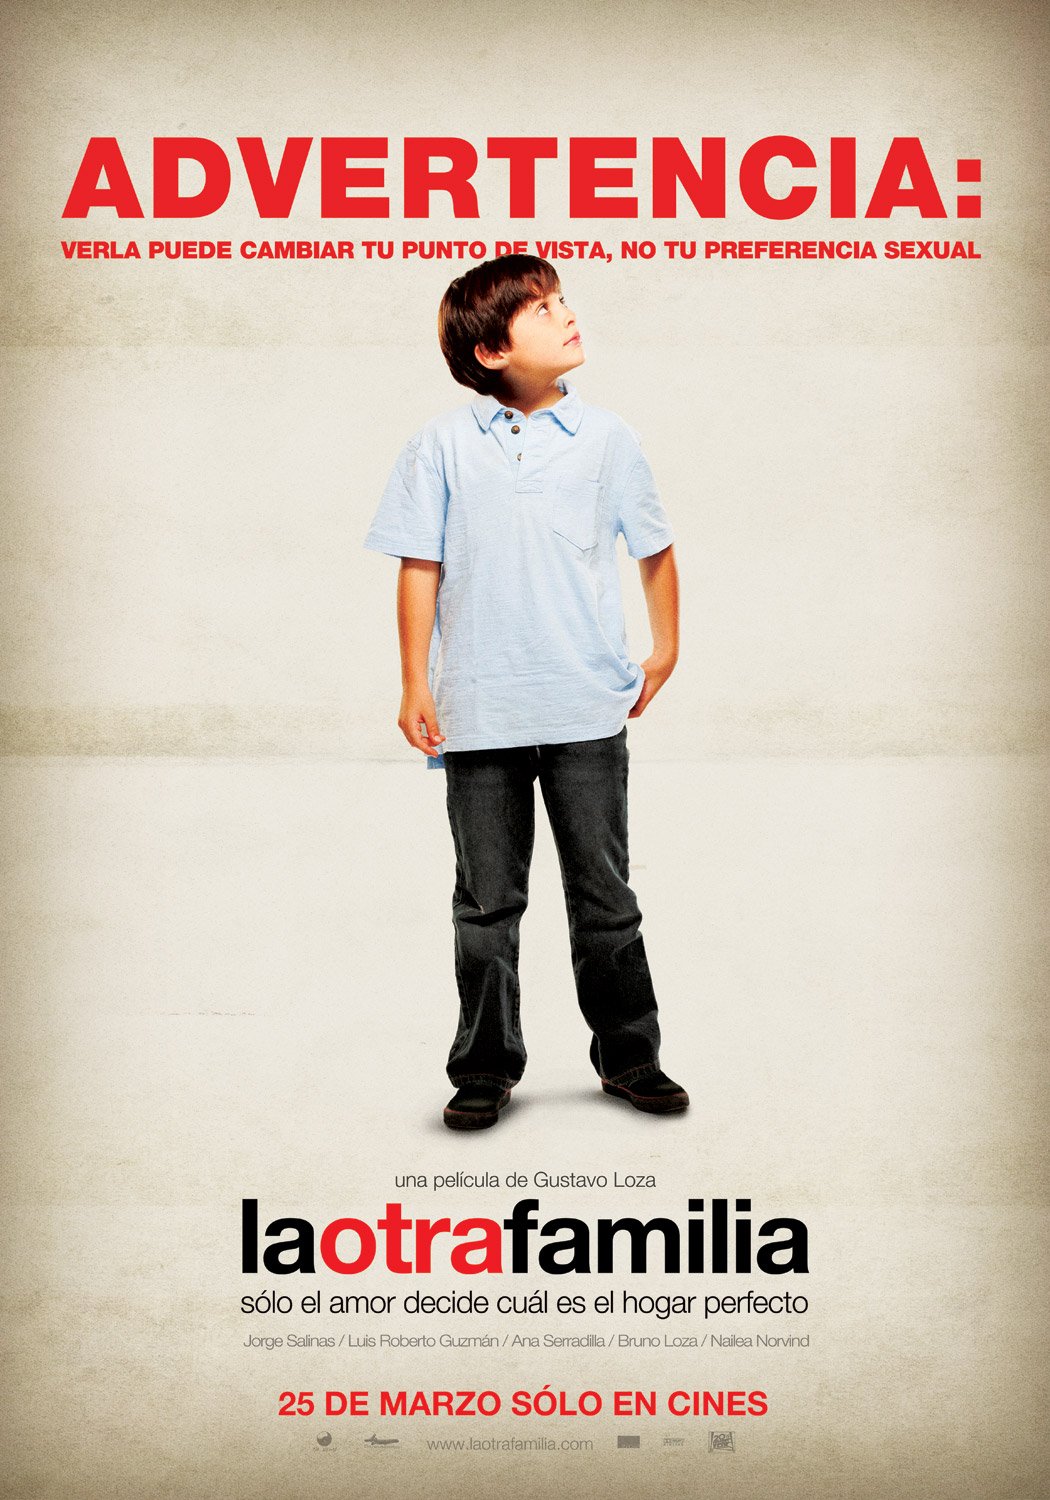 Extra Large Movie Poster Image for La otra familia (#3 of 5)